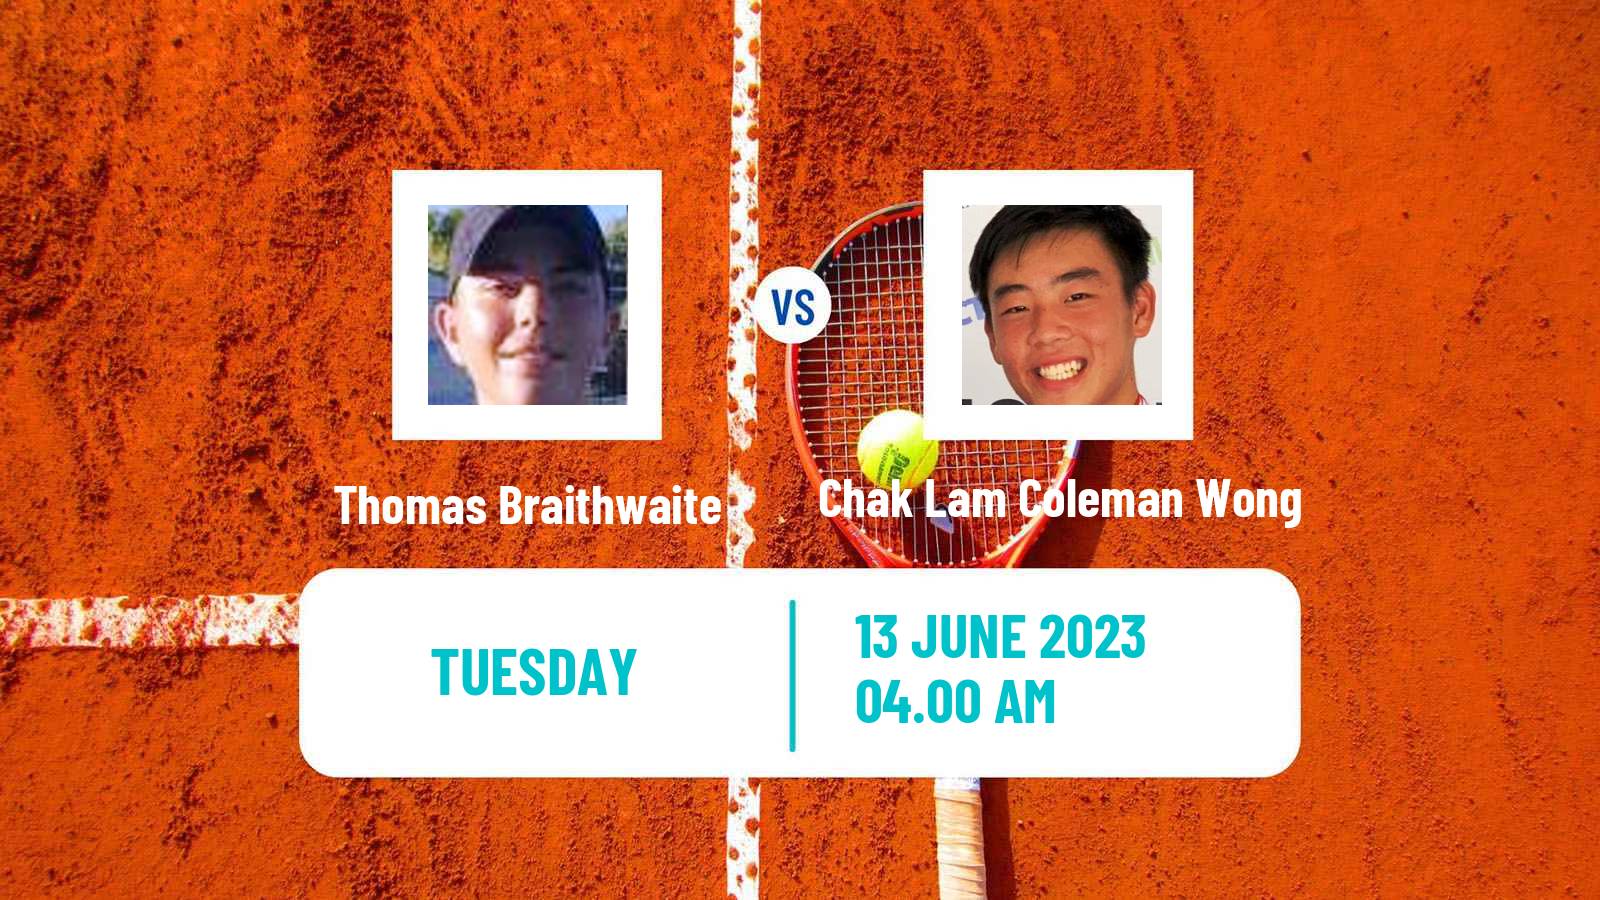 Tennis ITF M15 Monastir 24 Men Thomas Braithwaite - Chak Lam Coleman Wong